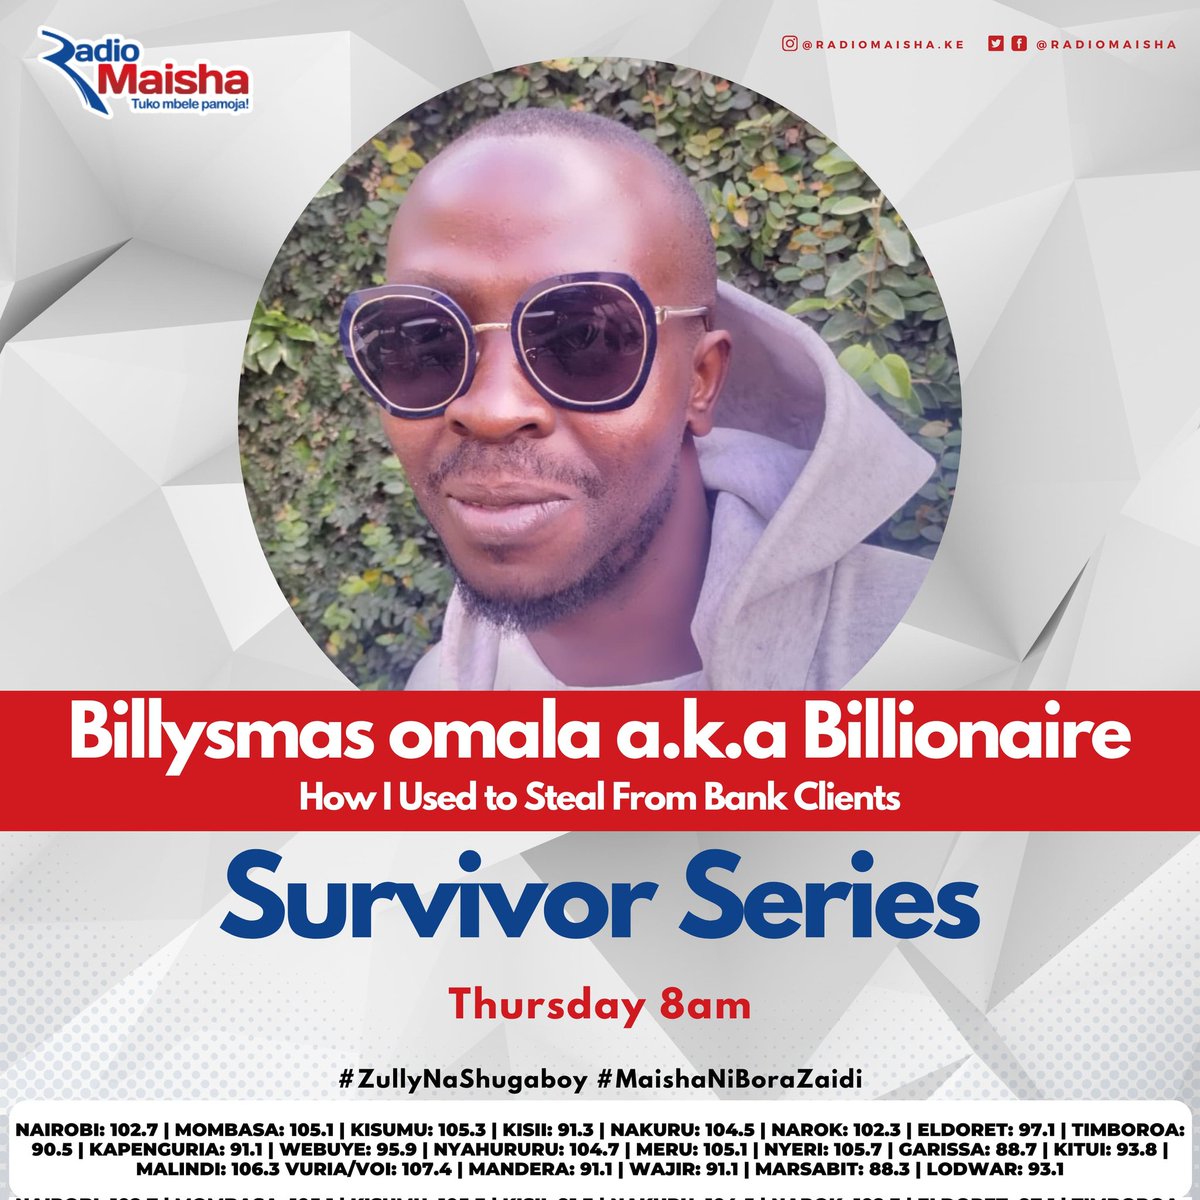 We are on #MaishaAsubuhi On Thursday Survivor Series. #ZullyNaShugaboy